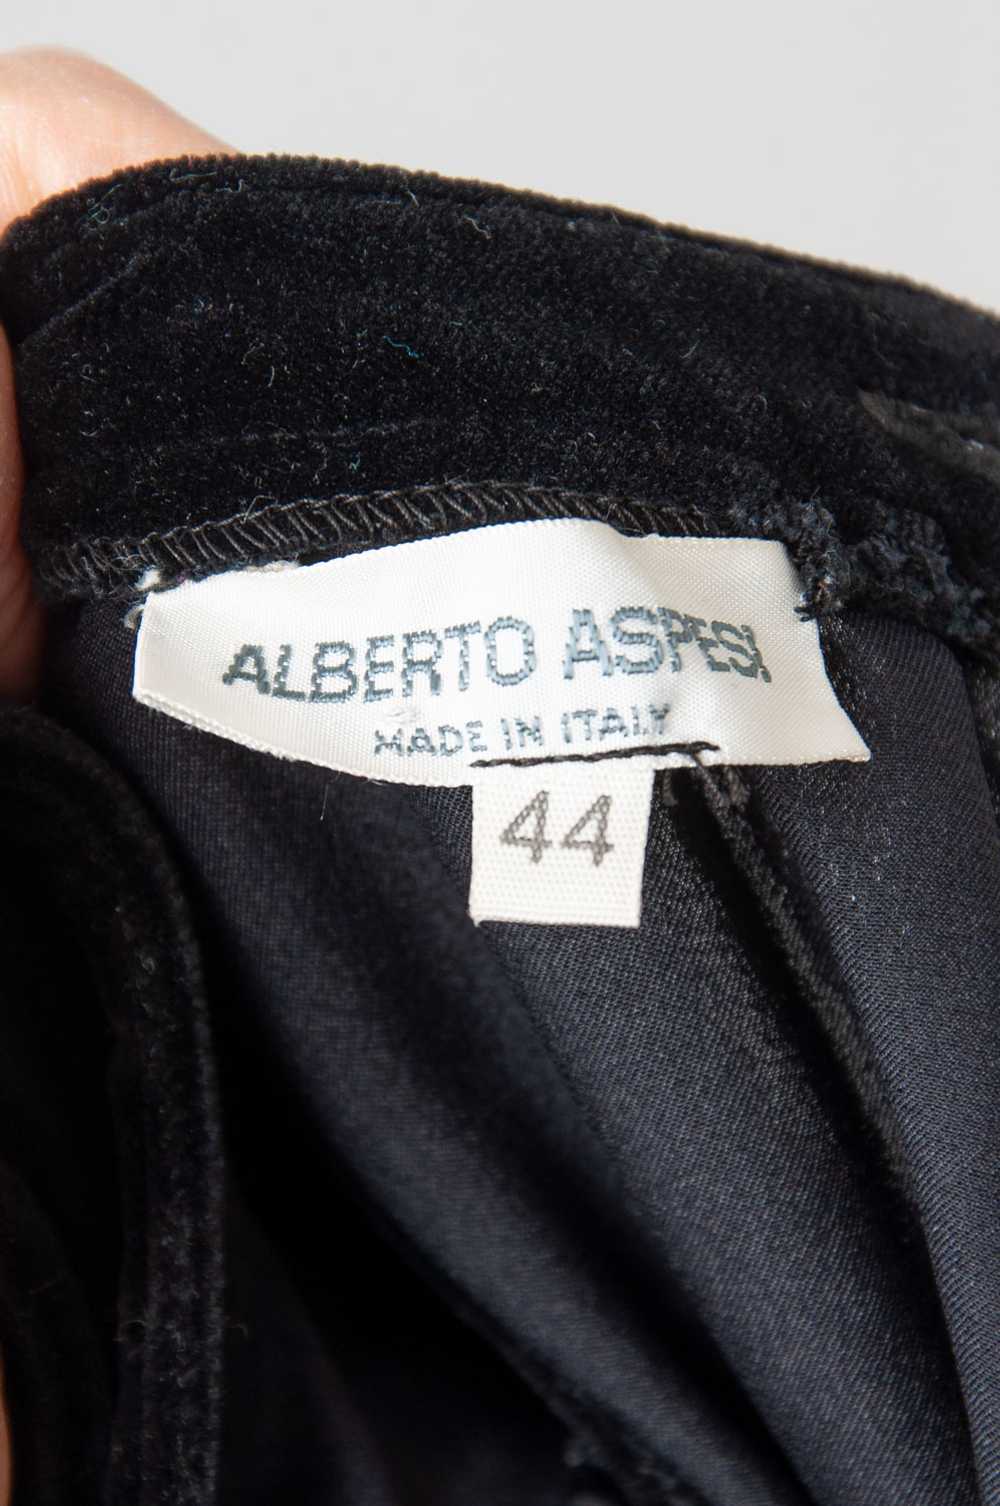 Alberto Aspesi Black silk dress - image 3